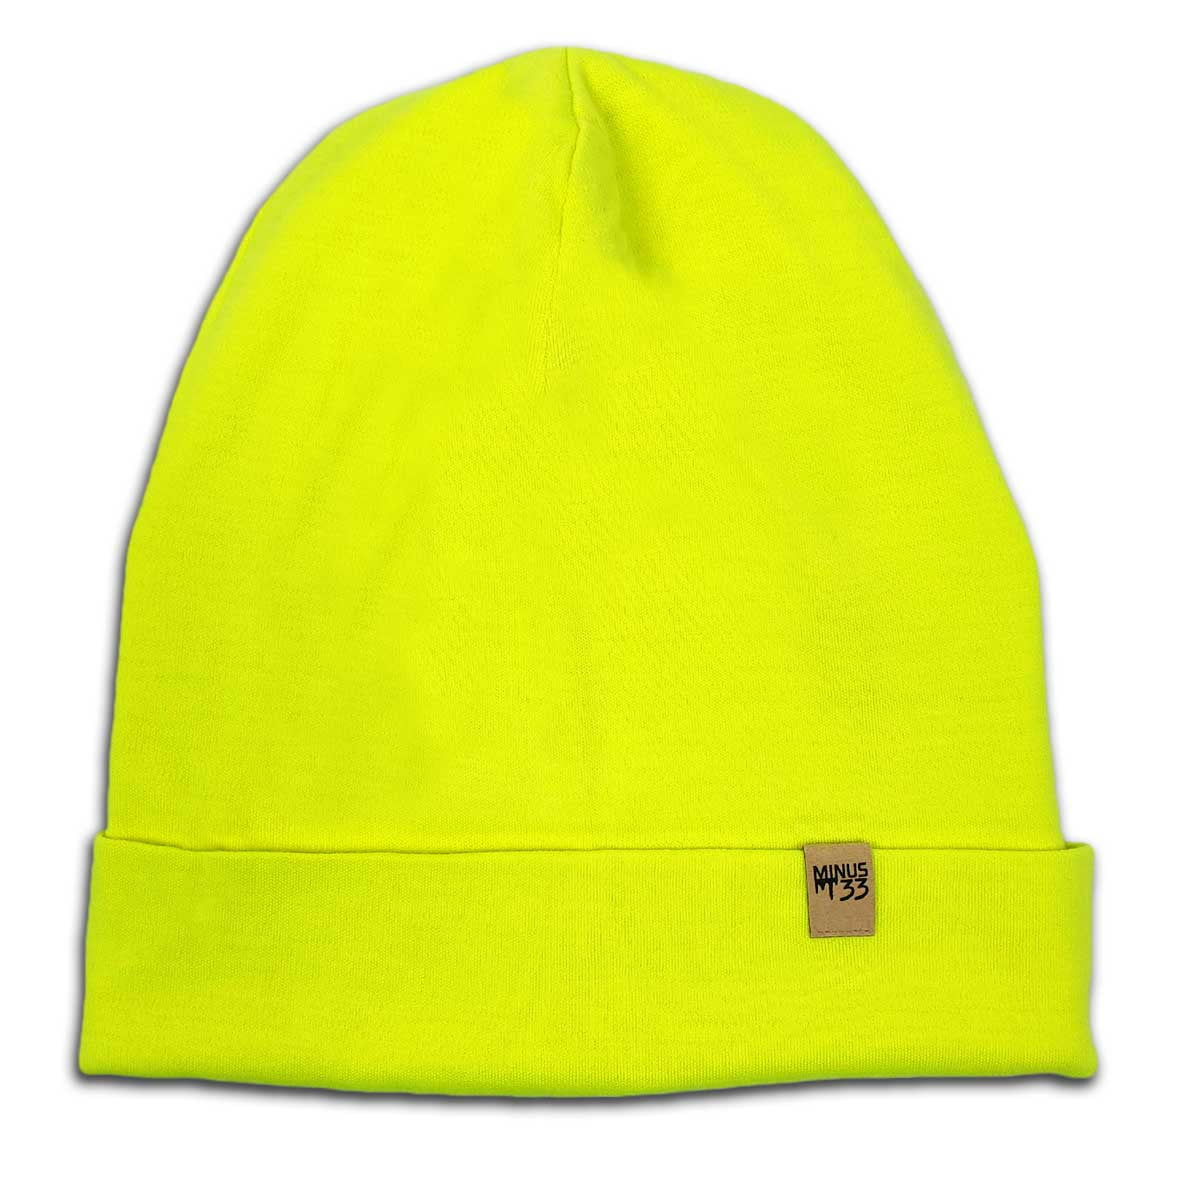 Choose Your Color MERIWOOL Unisex Merino Wool Cuff Beanie Hat